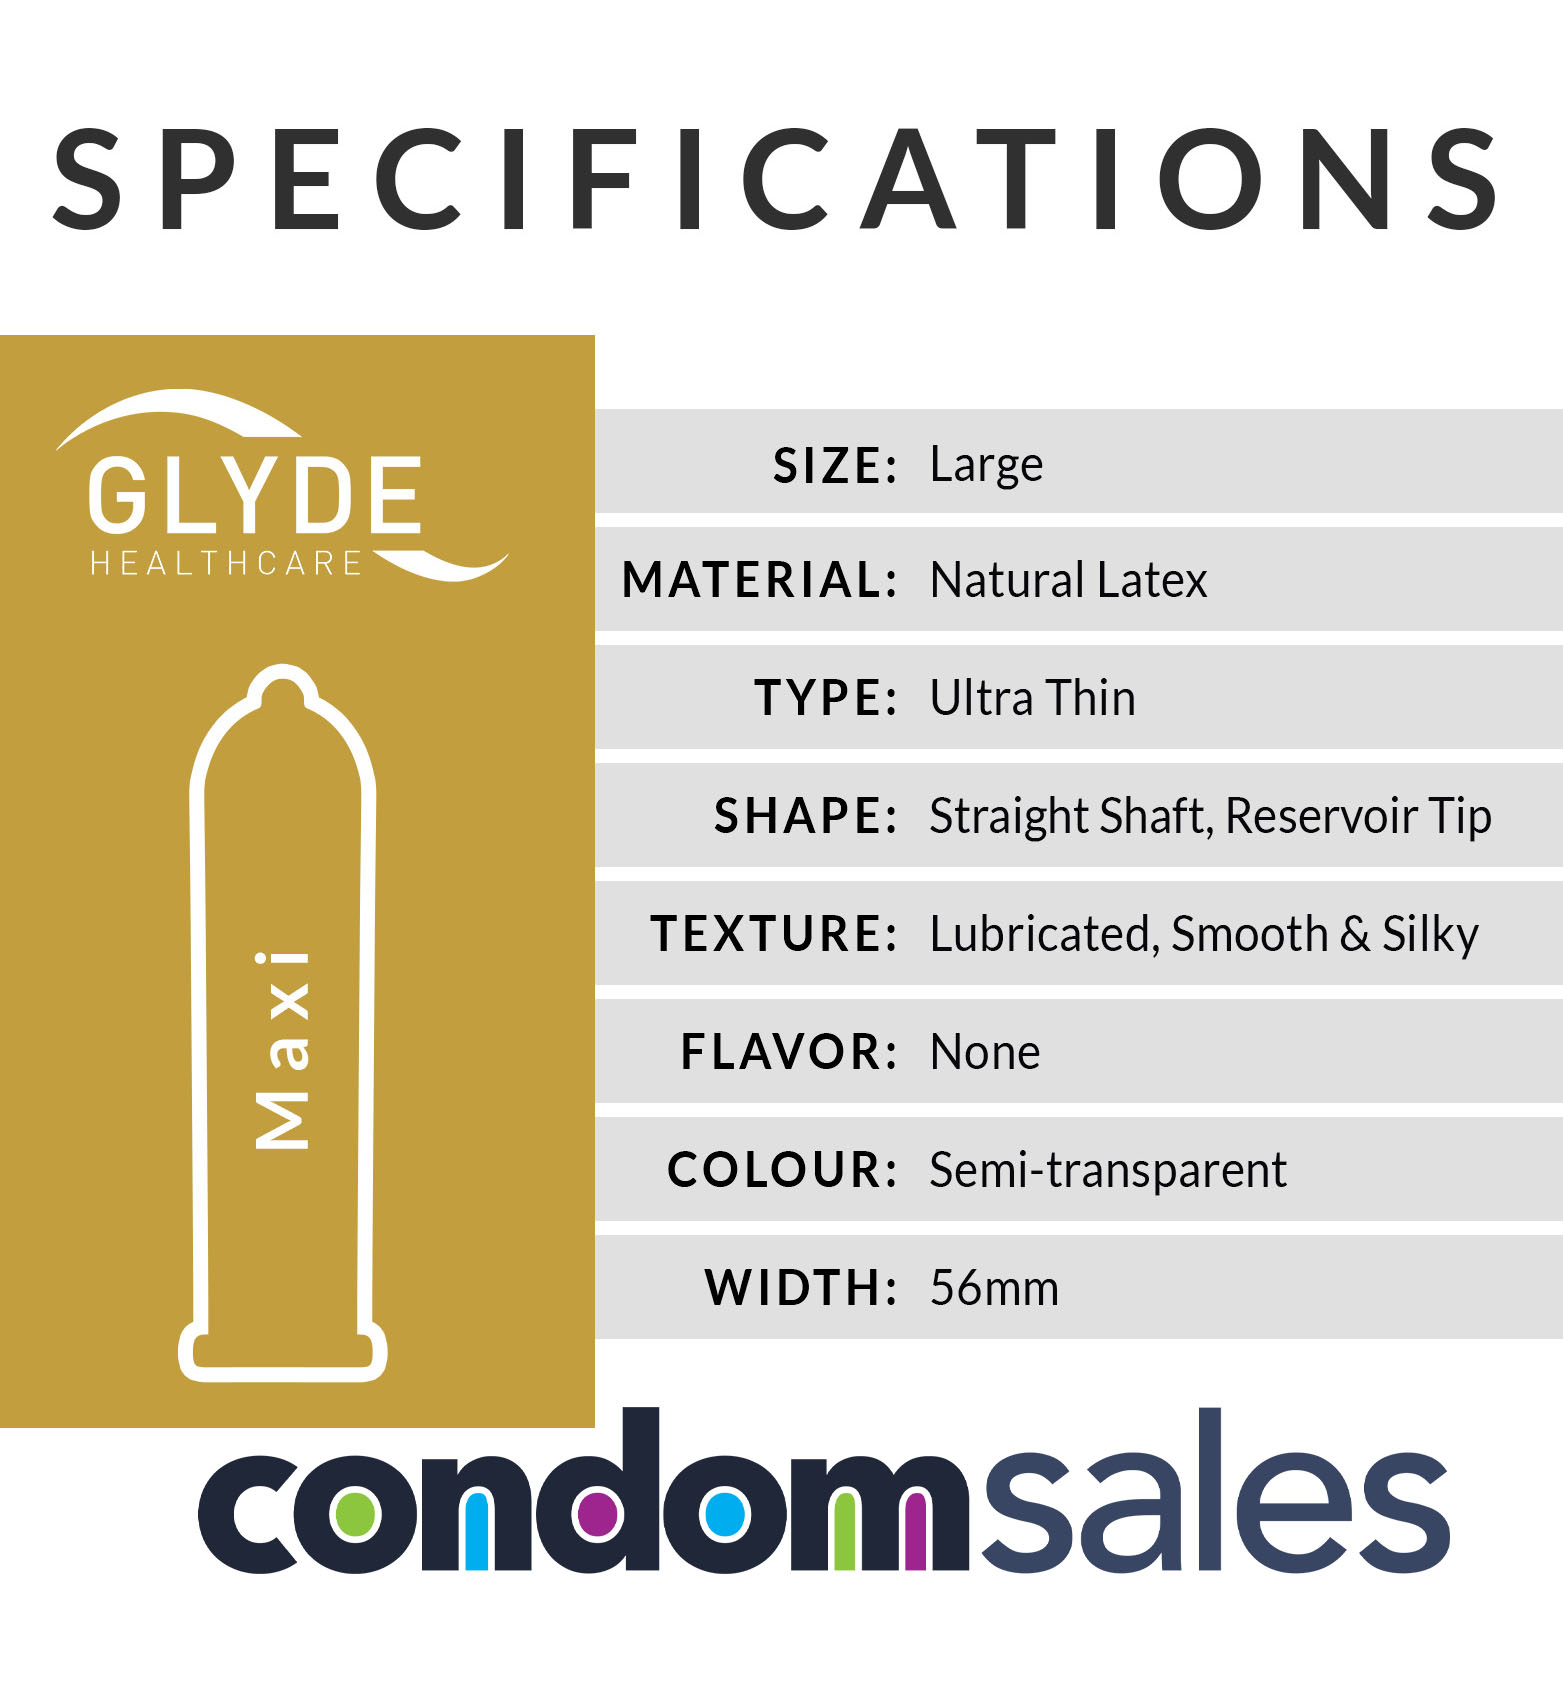 Glyde Maxi 56mm Condoms (24 loose packed) - Buy Condoms Online